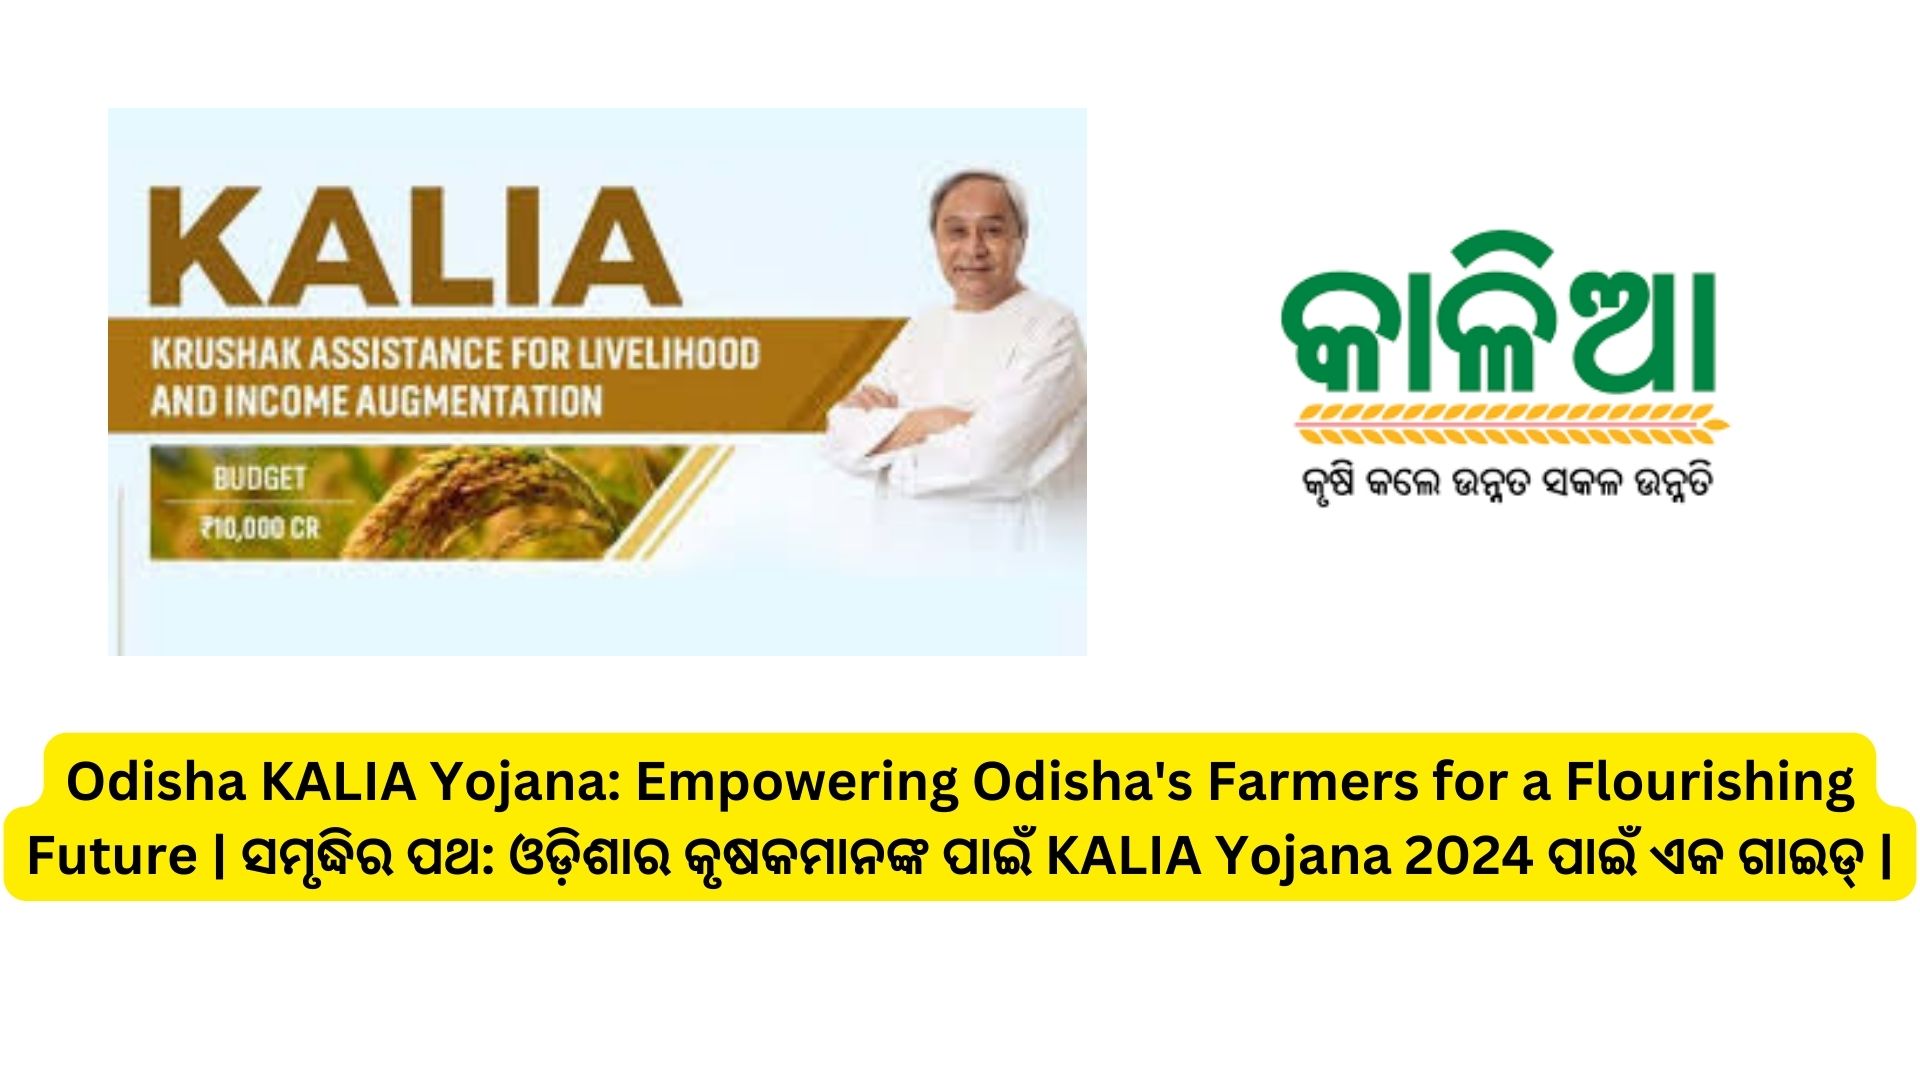 Odisha KALIA Yojana: Empowering Odisha's Farmers for a Flourishing Future | ସମୃଦ୍ଧିର ପଥ: ଓଡ଼ିଶାର କୃଷକମାନଙ୍କ ପାଇଁ KALIA Yojana 2024 ପାଇଁ ଏକ ଗାଇଡ୍ |